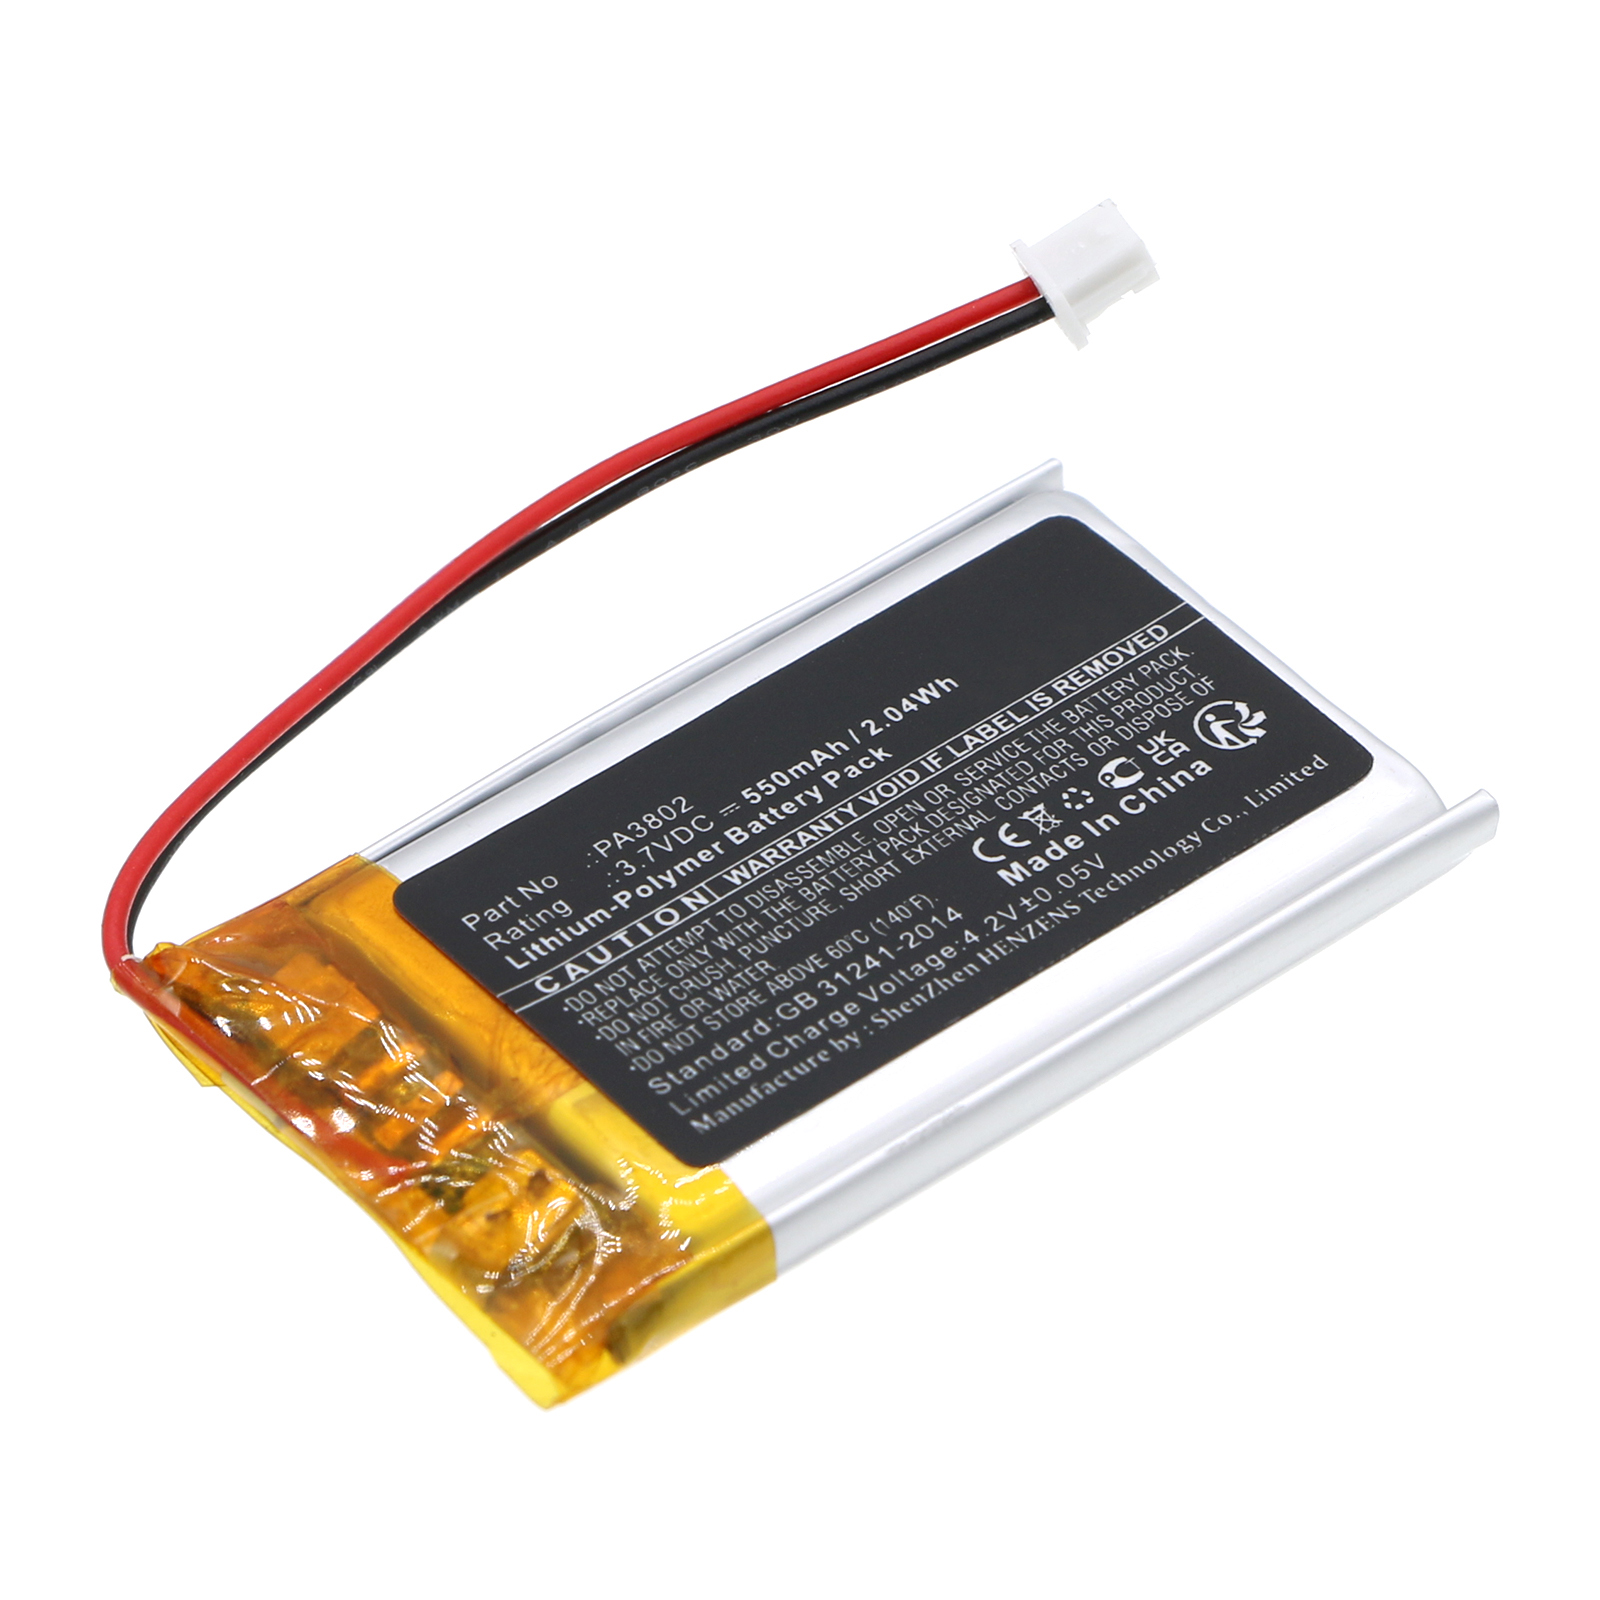 Synergy Digital Alarm System Battery, Compatible with Paradox PA3802 Alarm System Battery (Li-Pol, 3.7V, 550mAh)